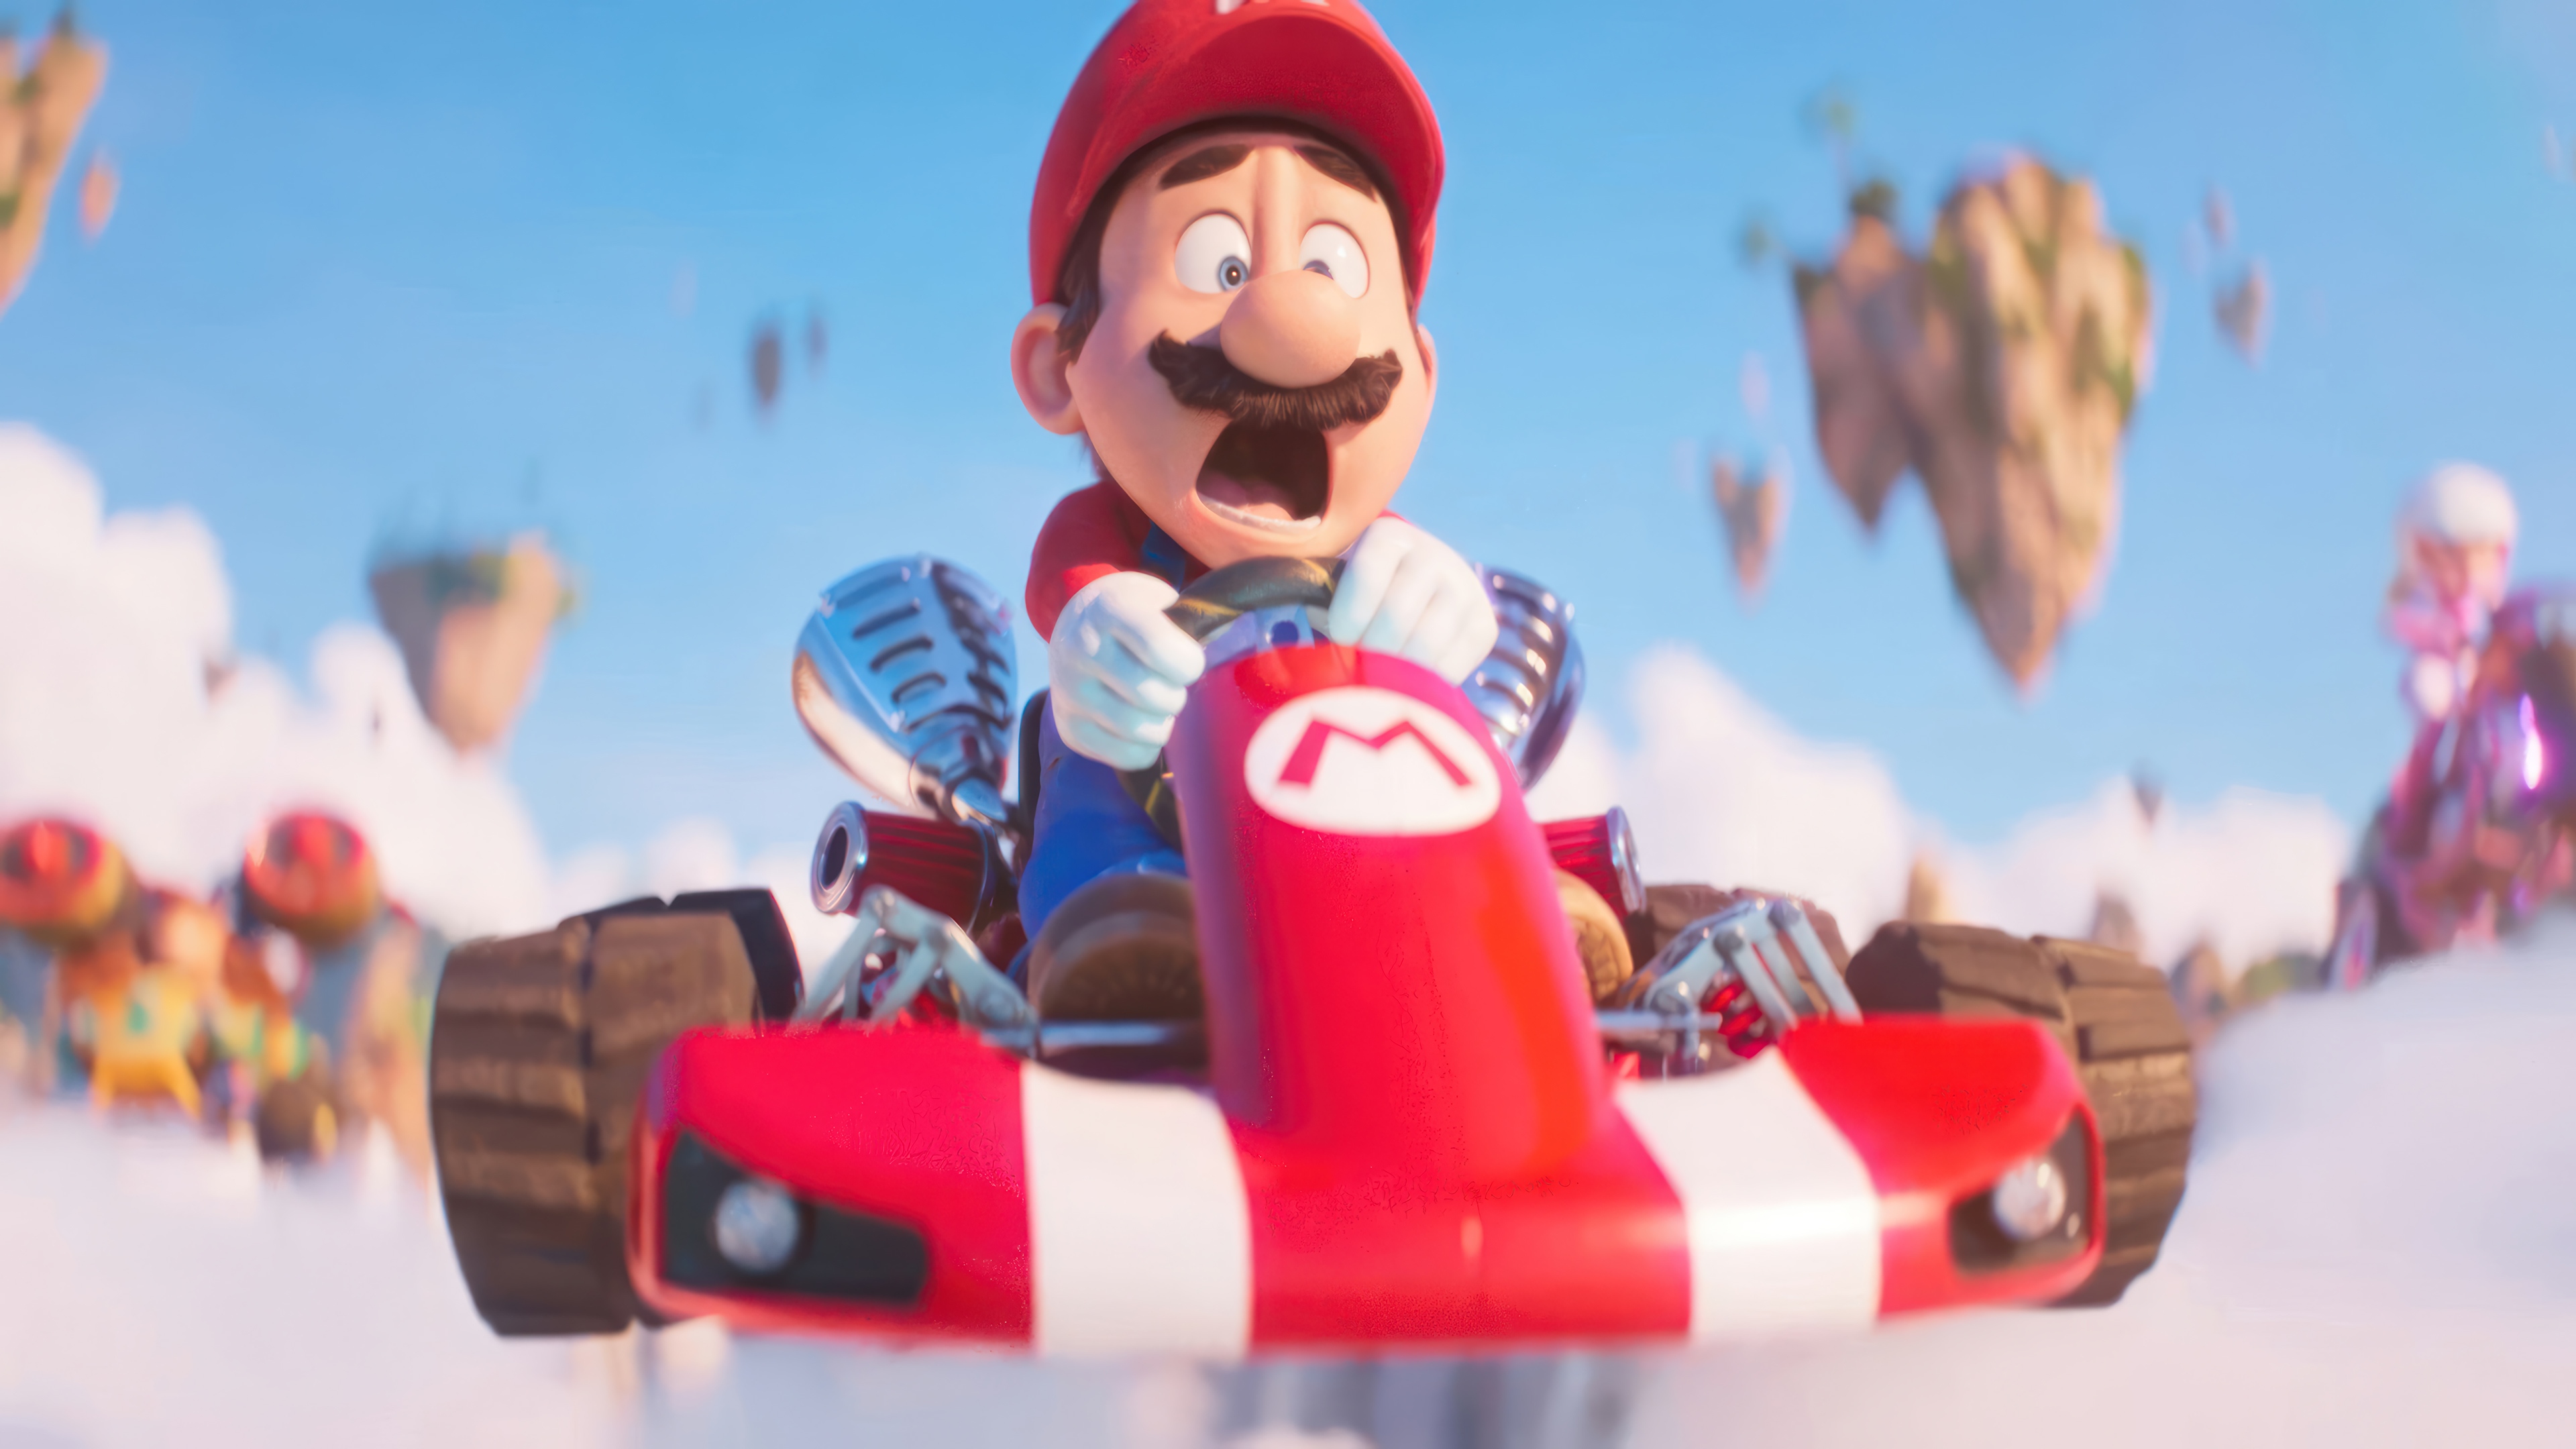 Fondos de pantalla Pelicula Mario Kart Racing Super Mario Bros